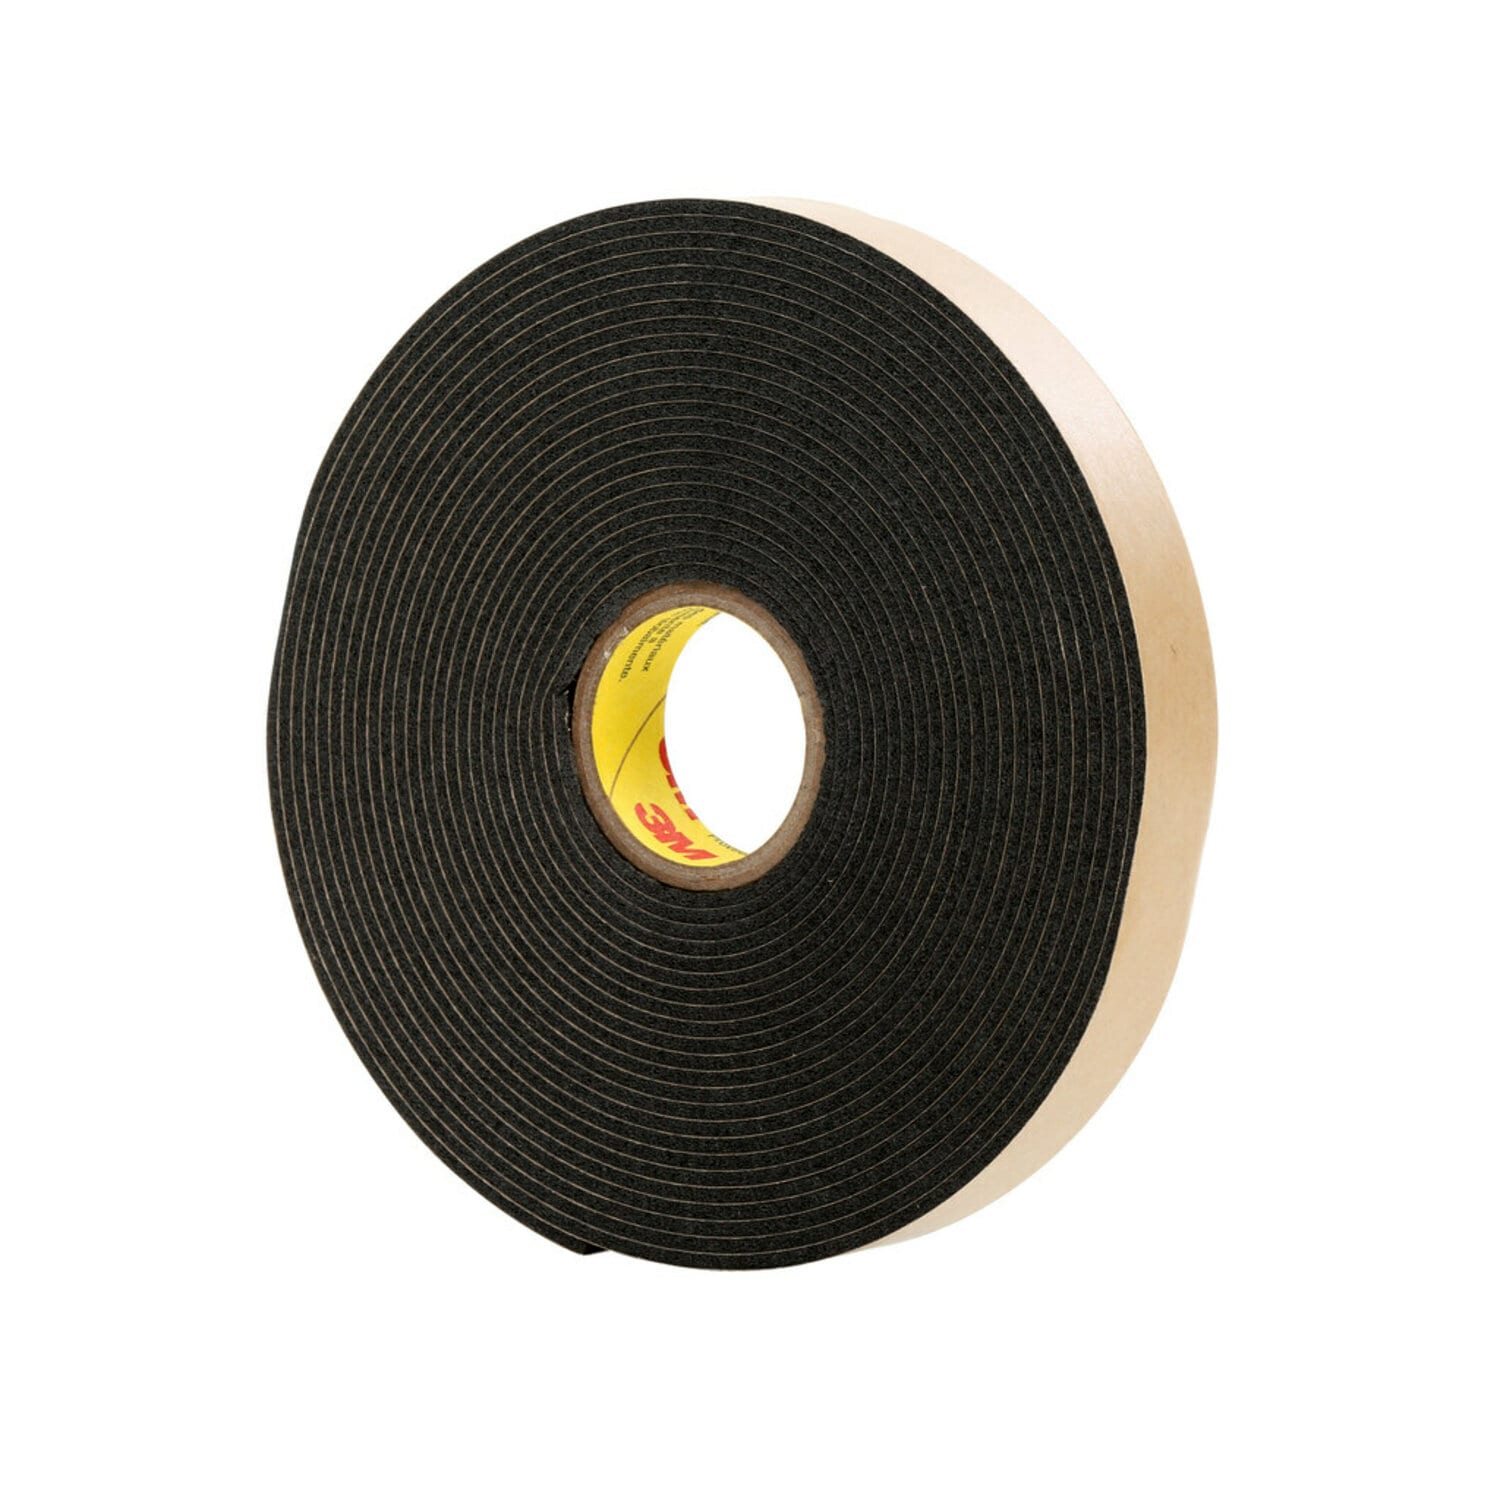 7100132988 - 3M Double Coated Polyethylene Foam Tape 4492BF, Black, 31 mil, Film
Liner, Roll, Config